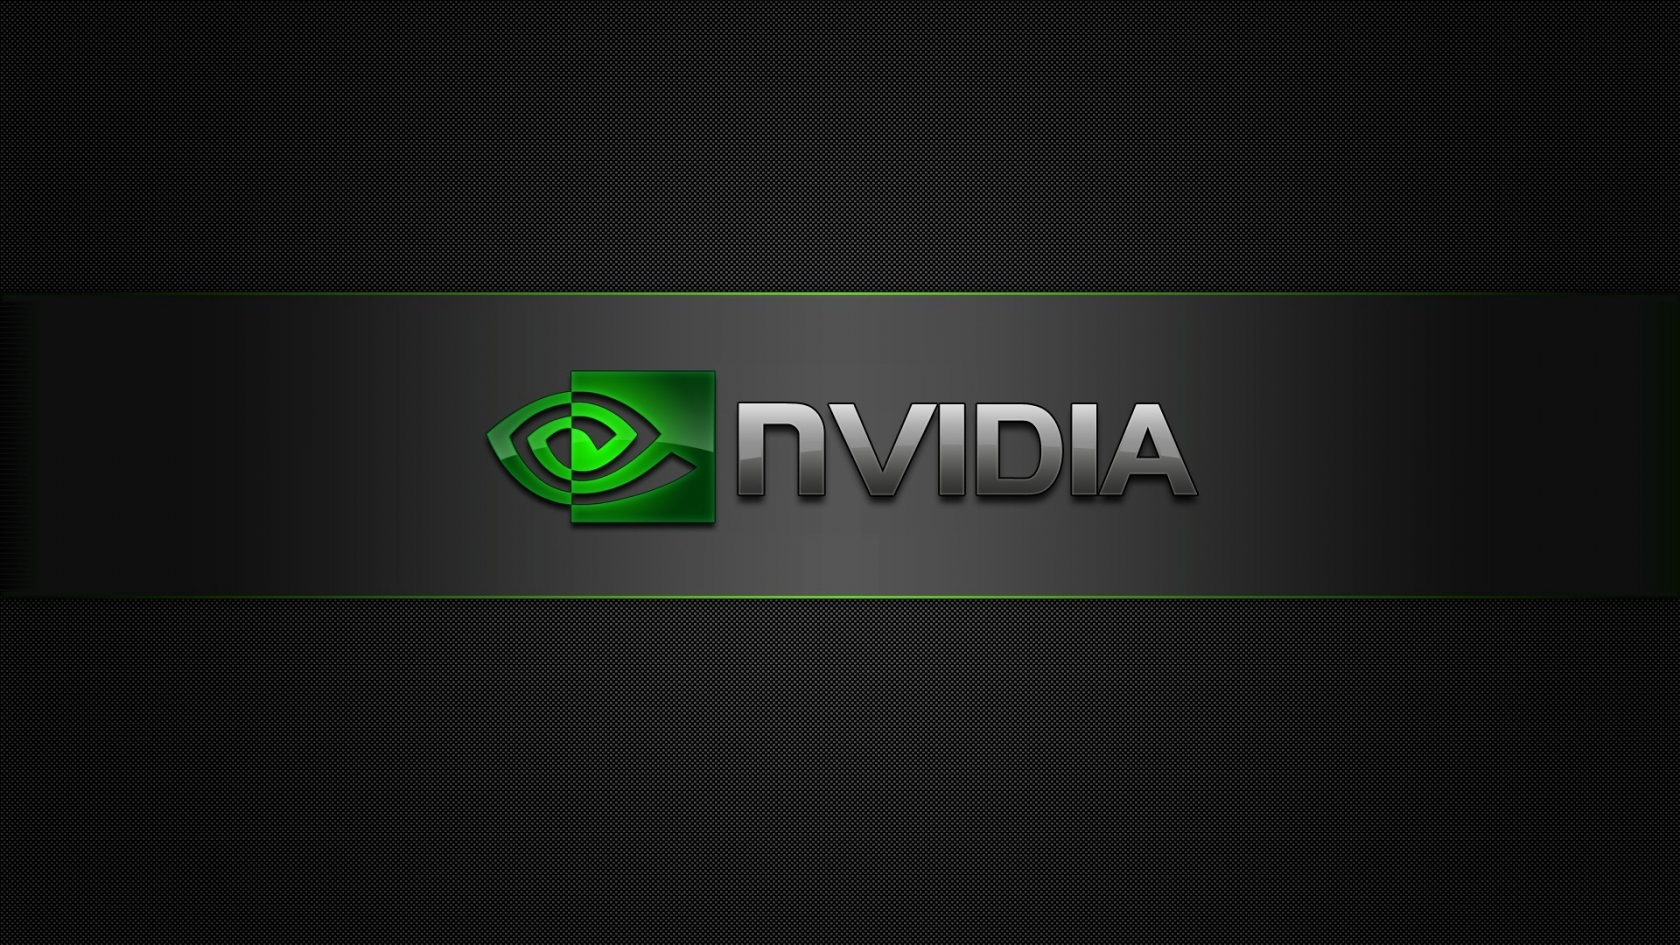 Nvidia Minimalistic for 1680 x 945 HDTV resolution